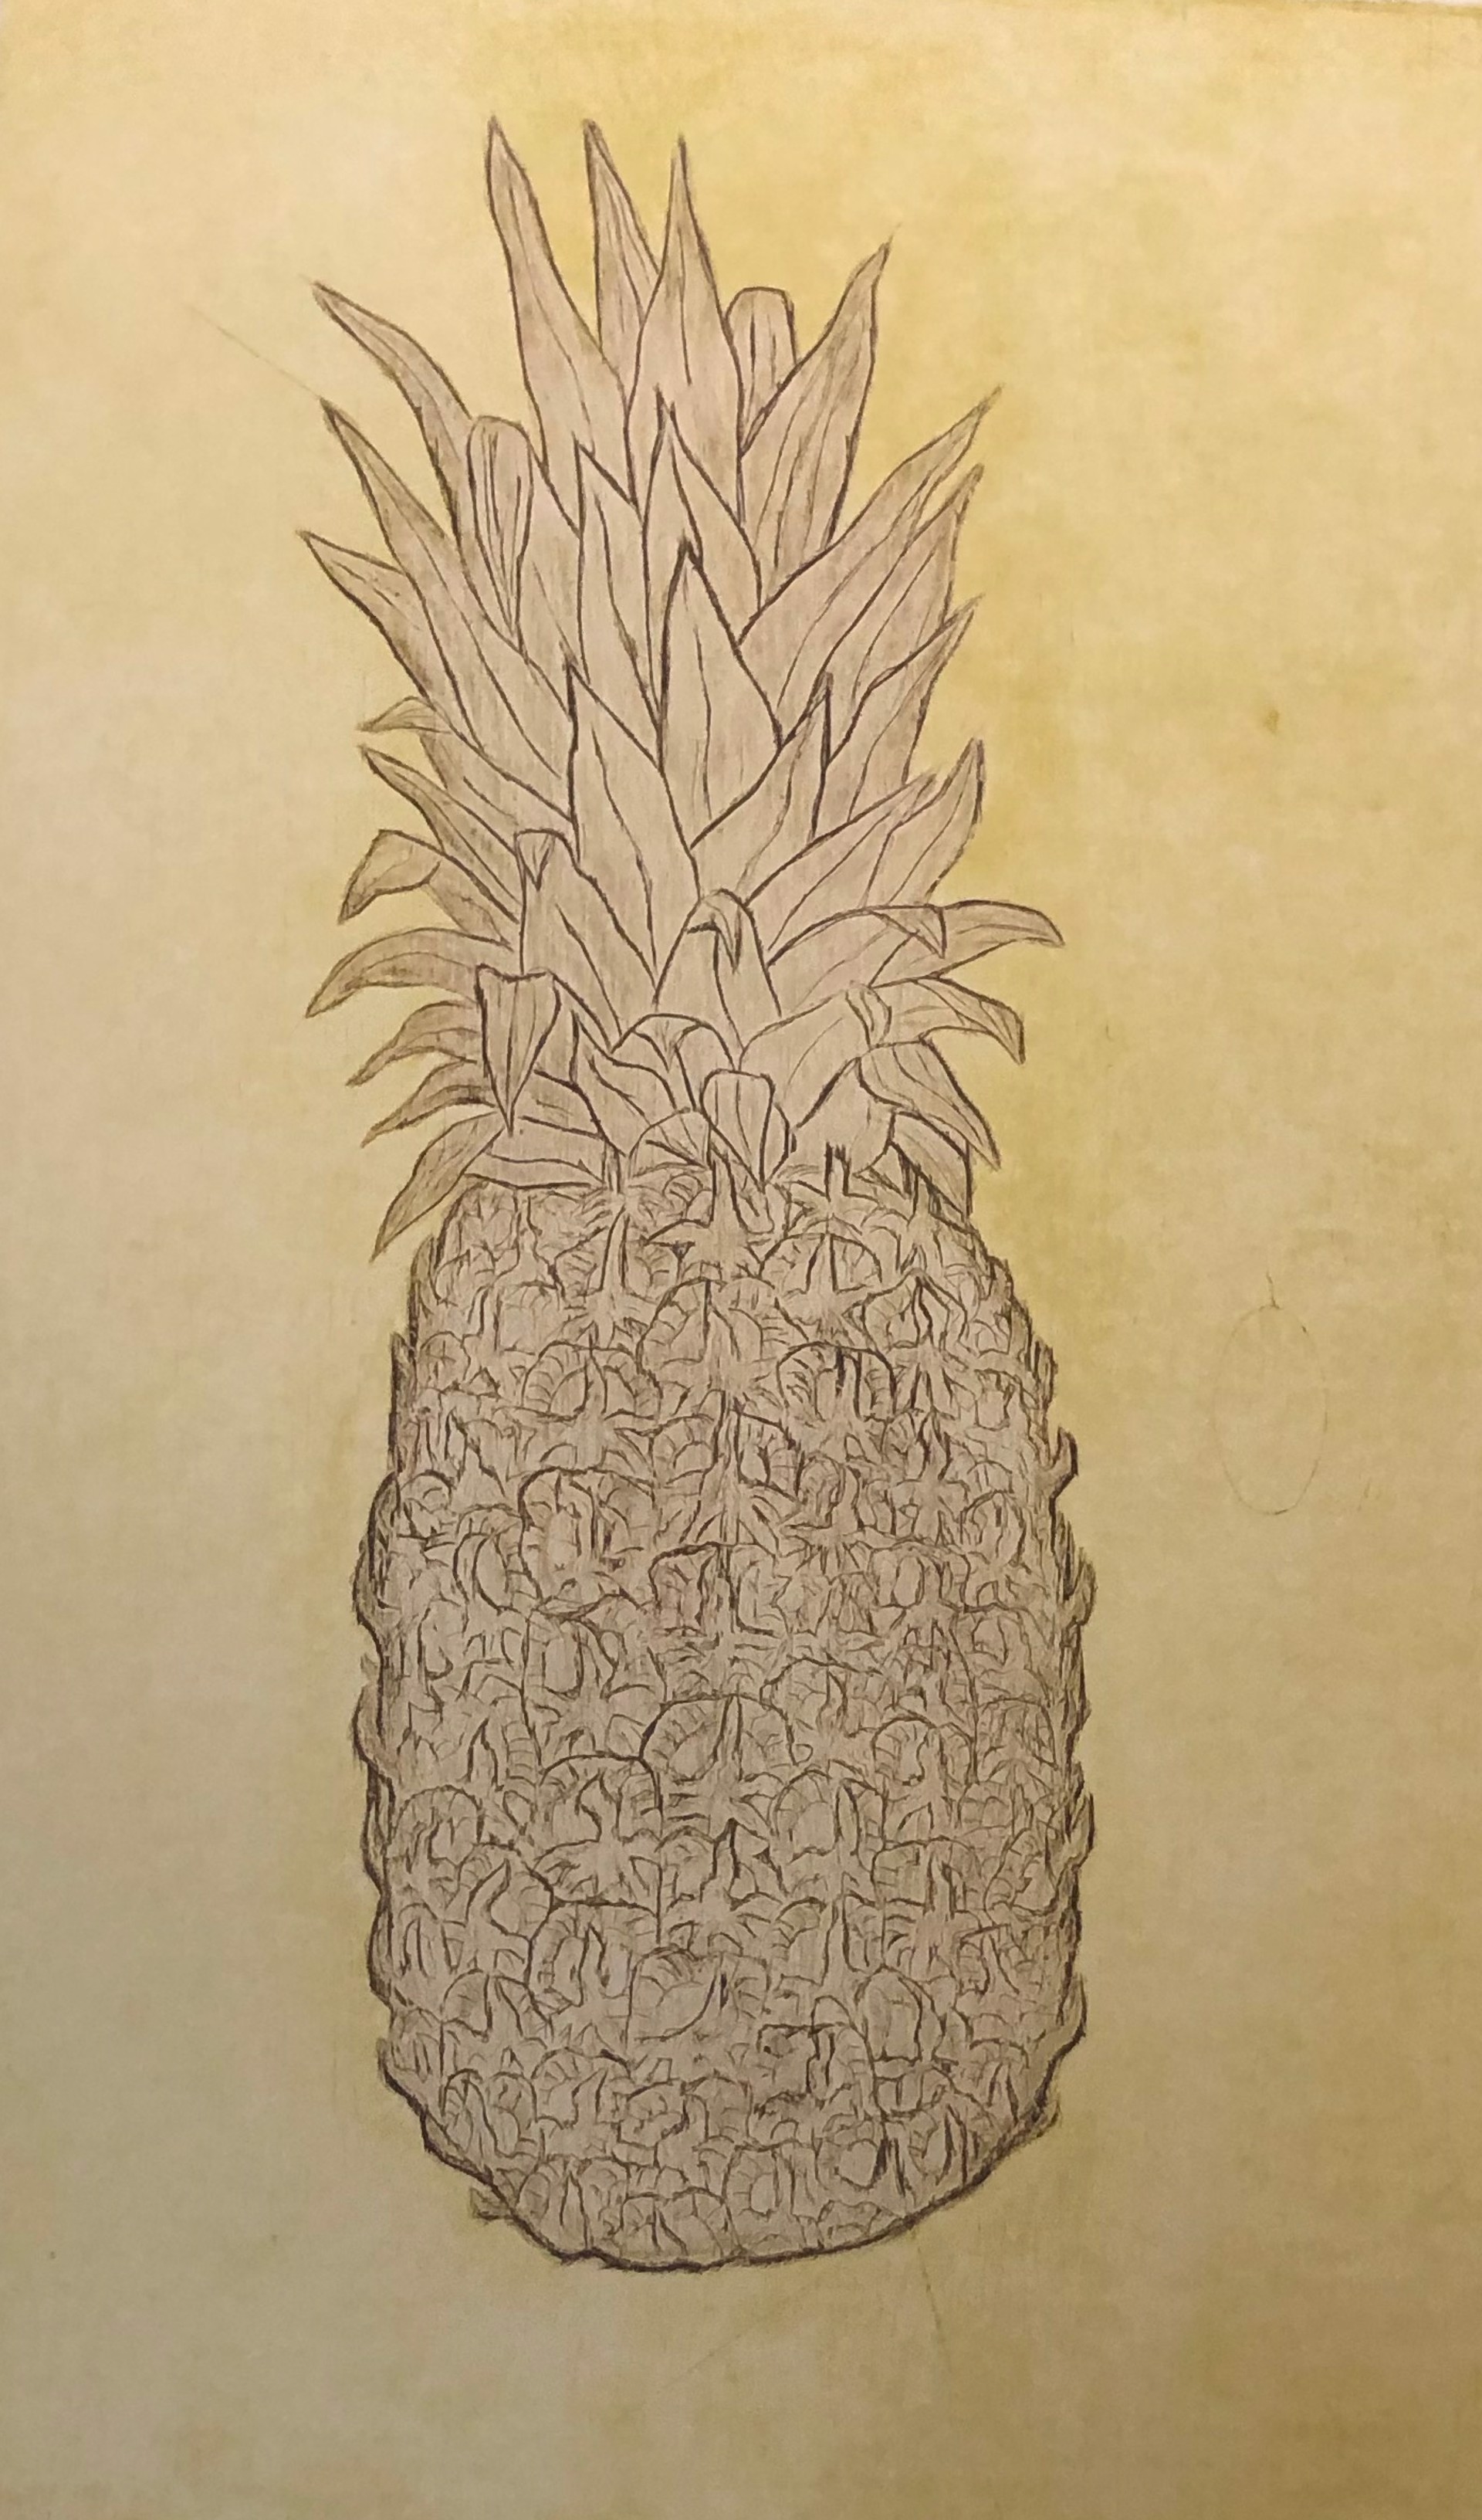 Pineapple (monochromatic) by David Hefner